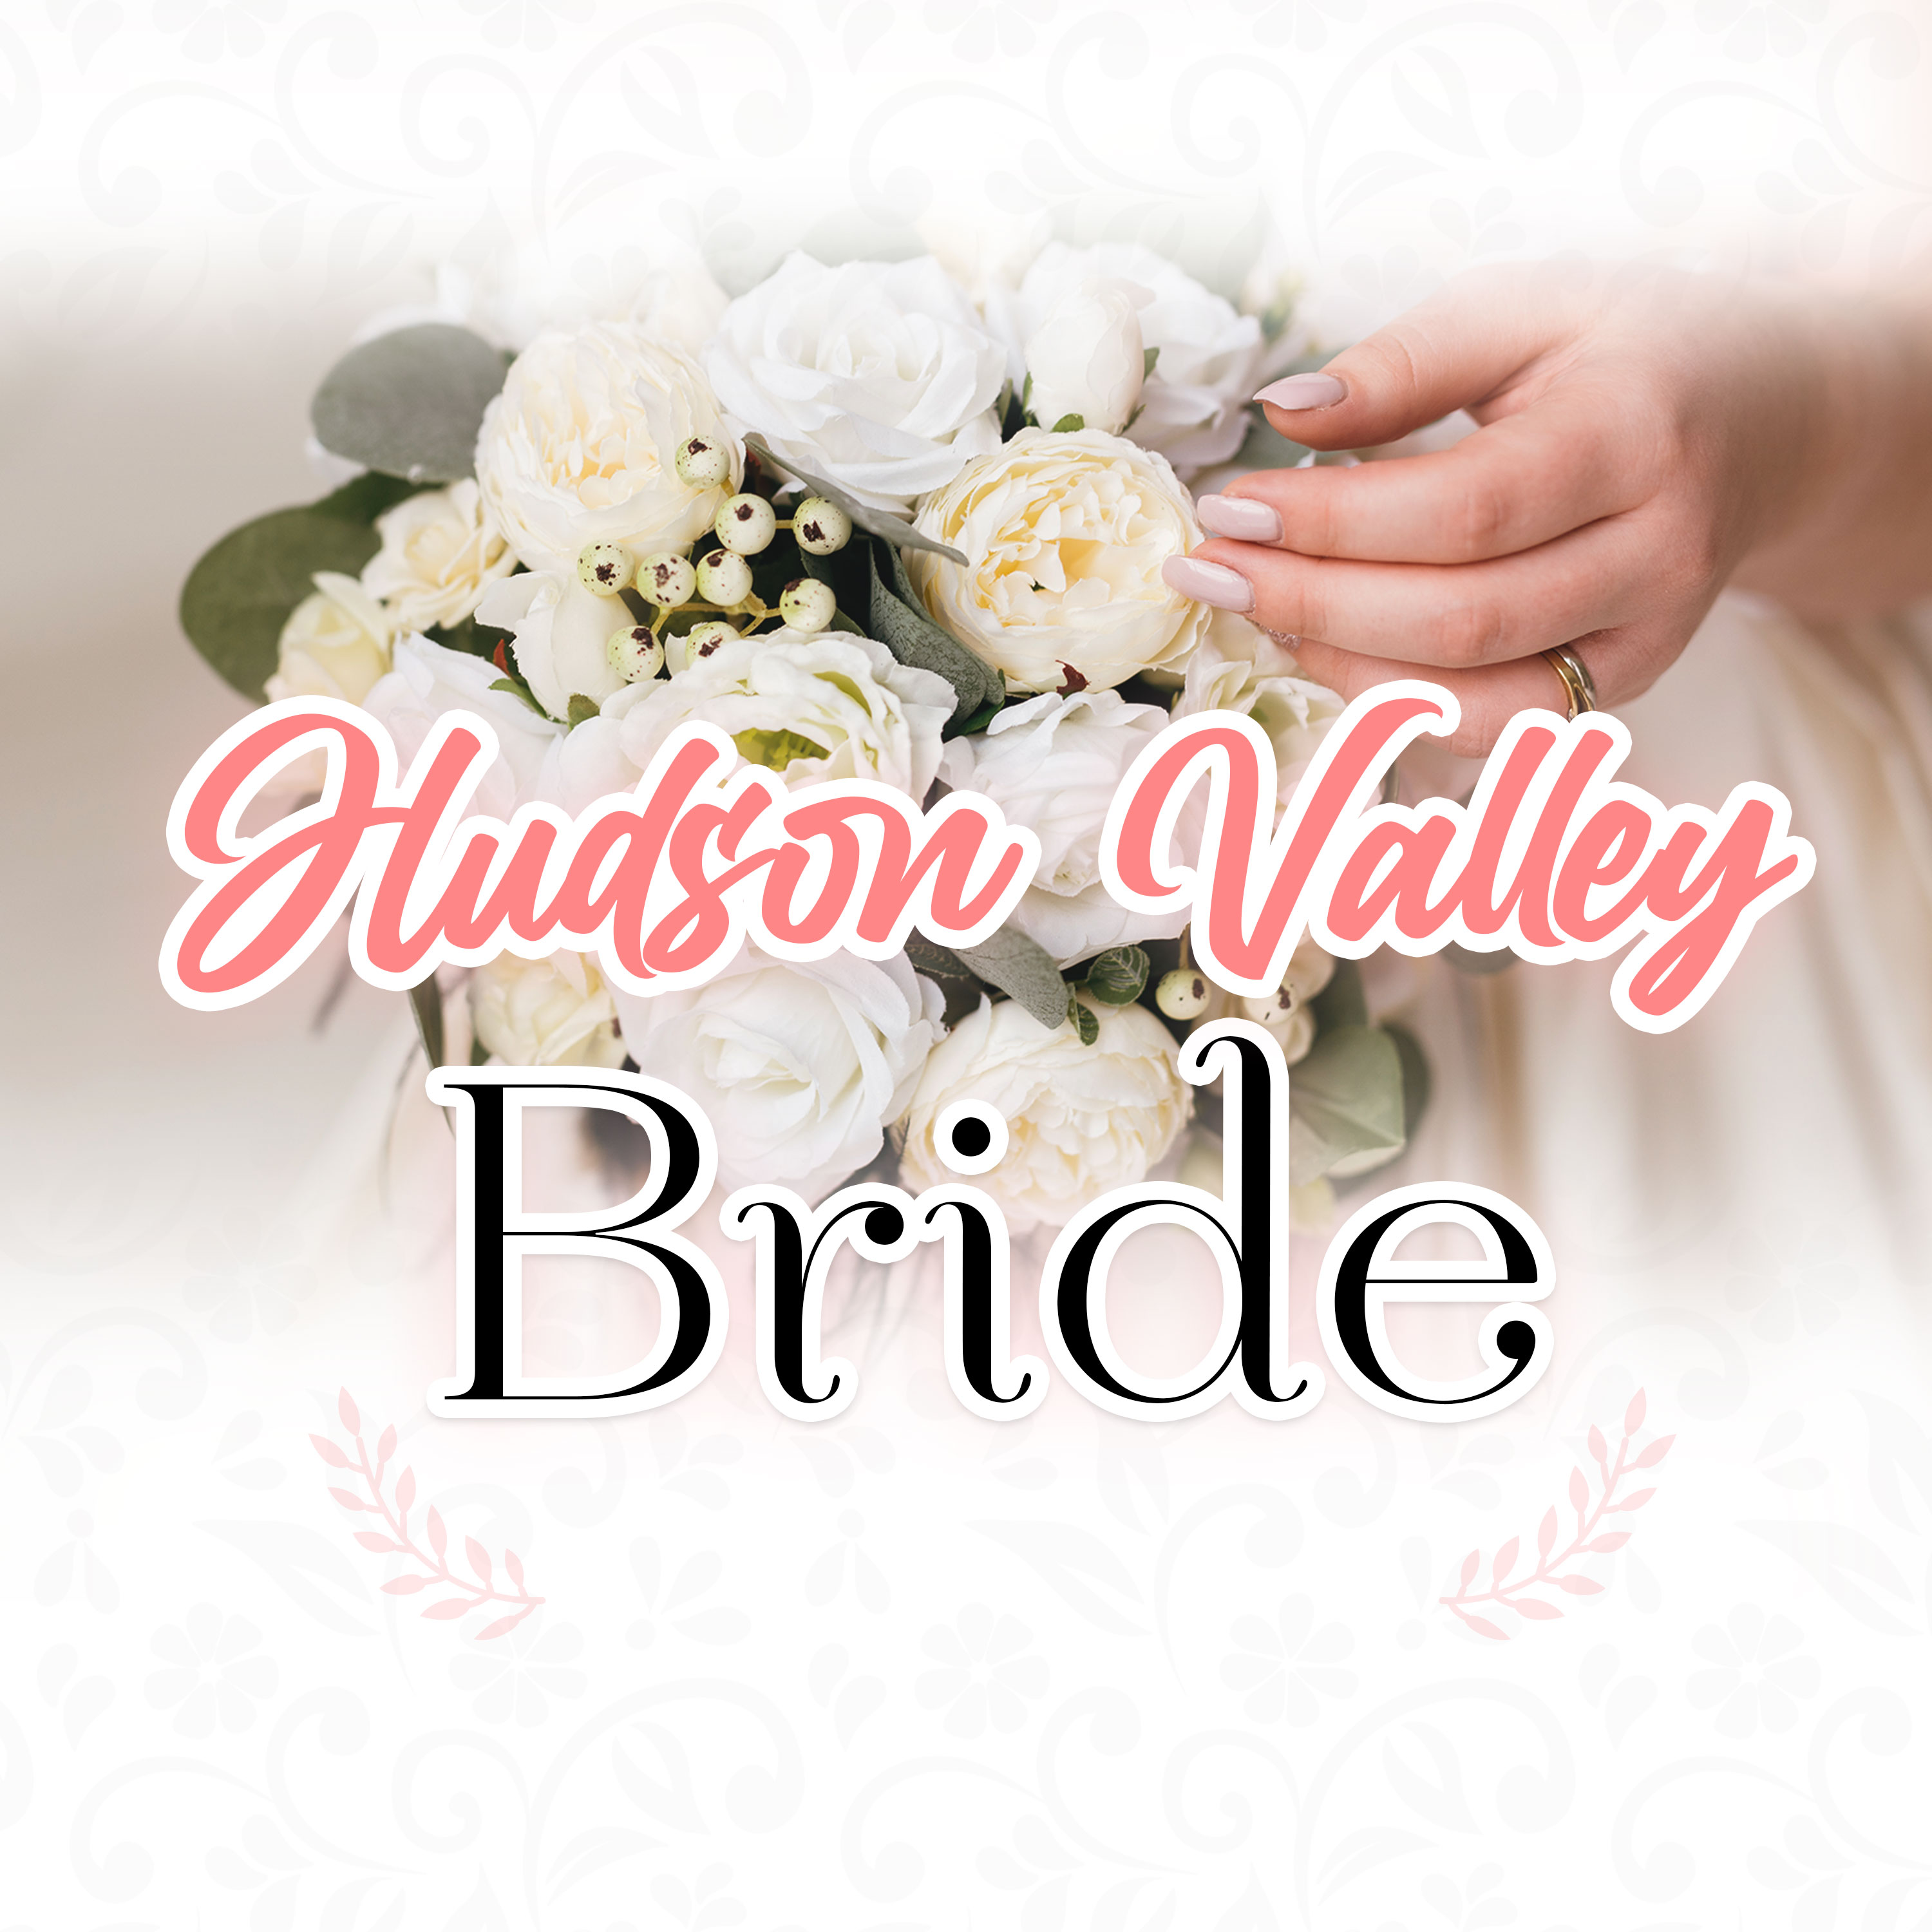 Hudson Valley Bride